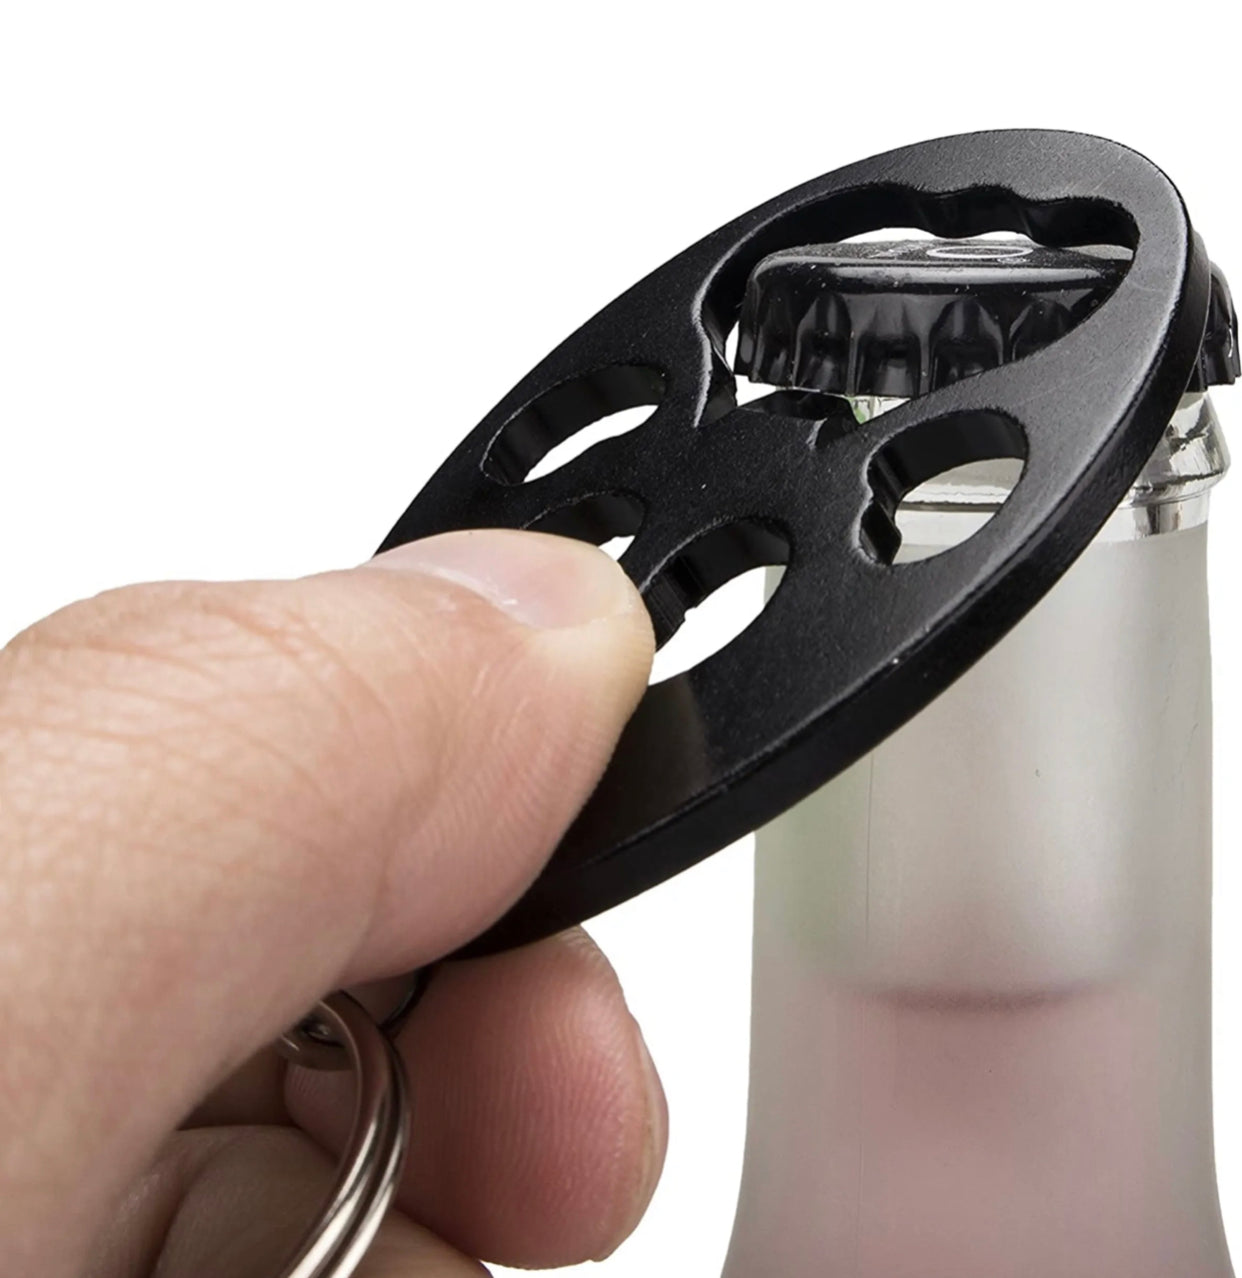 Paw Keychain & Bottle opener.